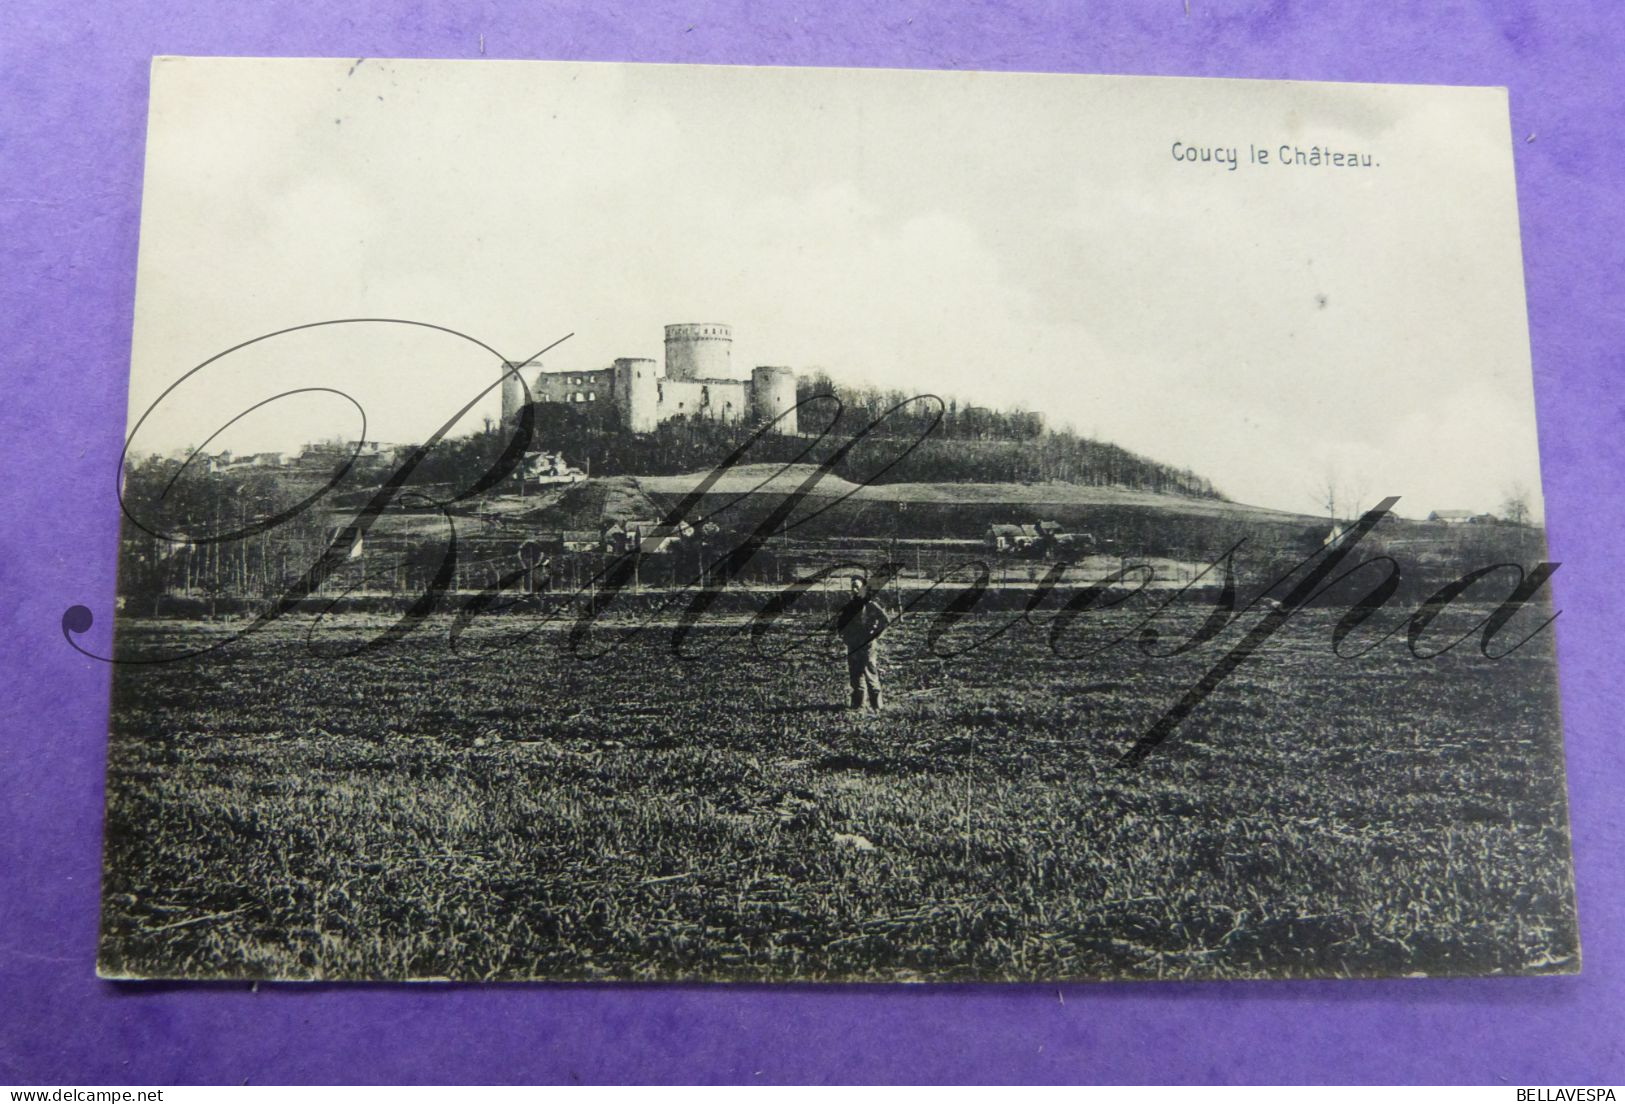 Coucy Chateau Feldpost Pulvermacher  Thüringen  France 1915  1914-18 -15 Inf. 8e REG. 4 Kompanie  15 Infanterie Division - Weltkrieg 1914-18